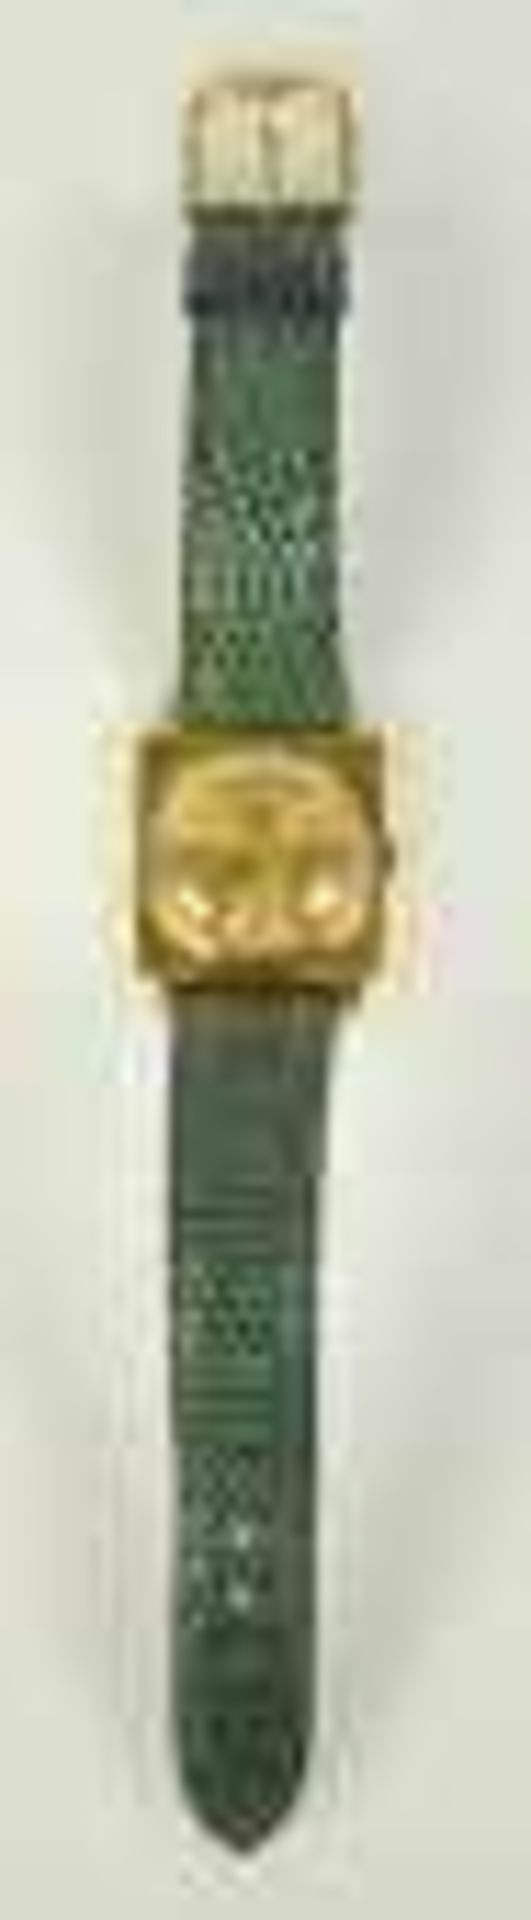 ARMBANDUHR Movado, Handaufzug, viereckiges Goldgehäuse 18ct, mit goldfarbenem Ziffernblatt, - Bild 2 aus 2